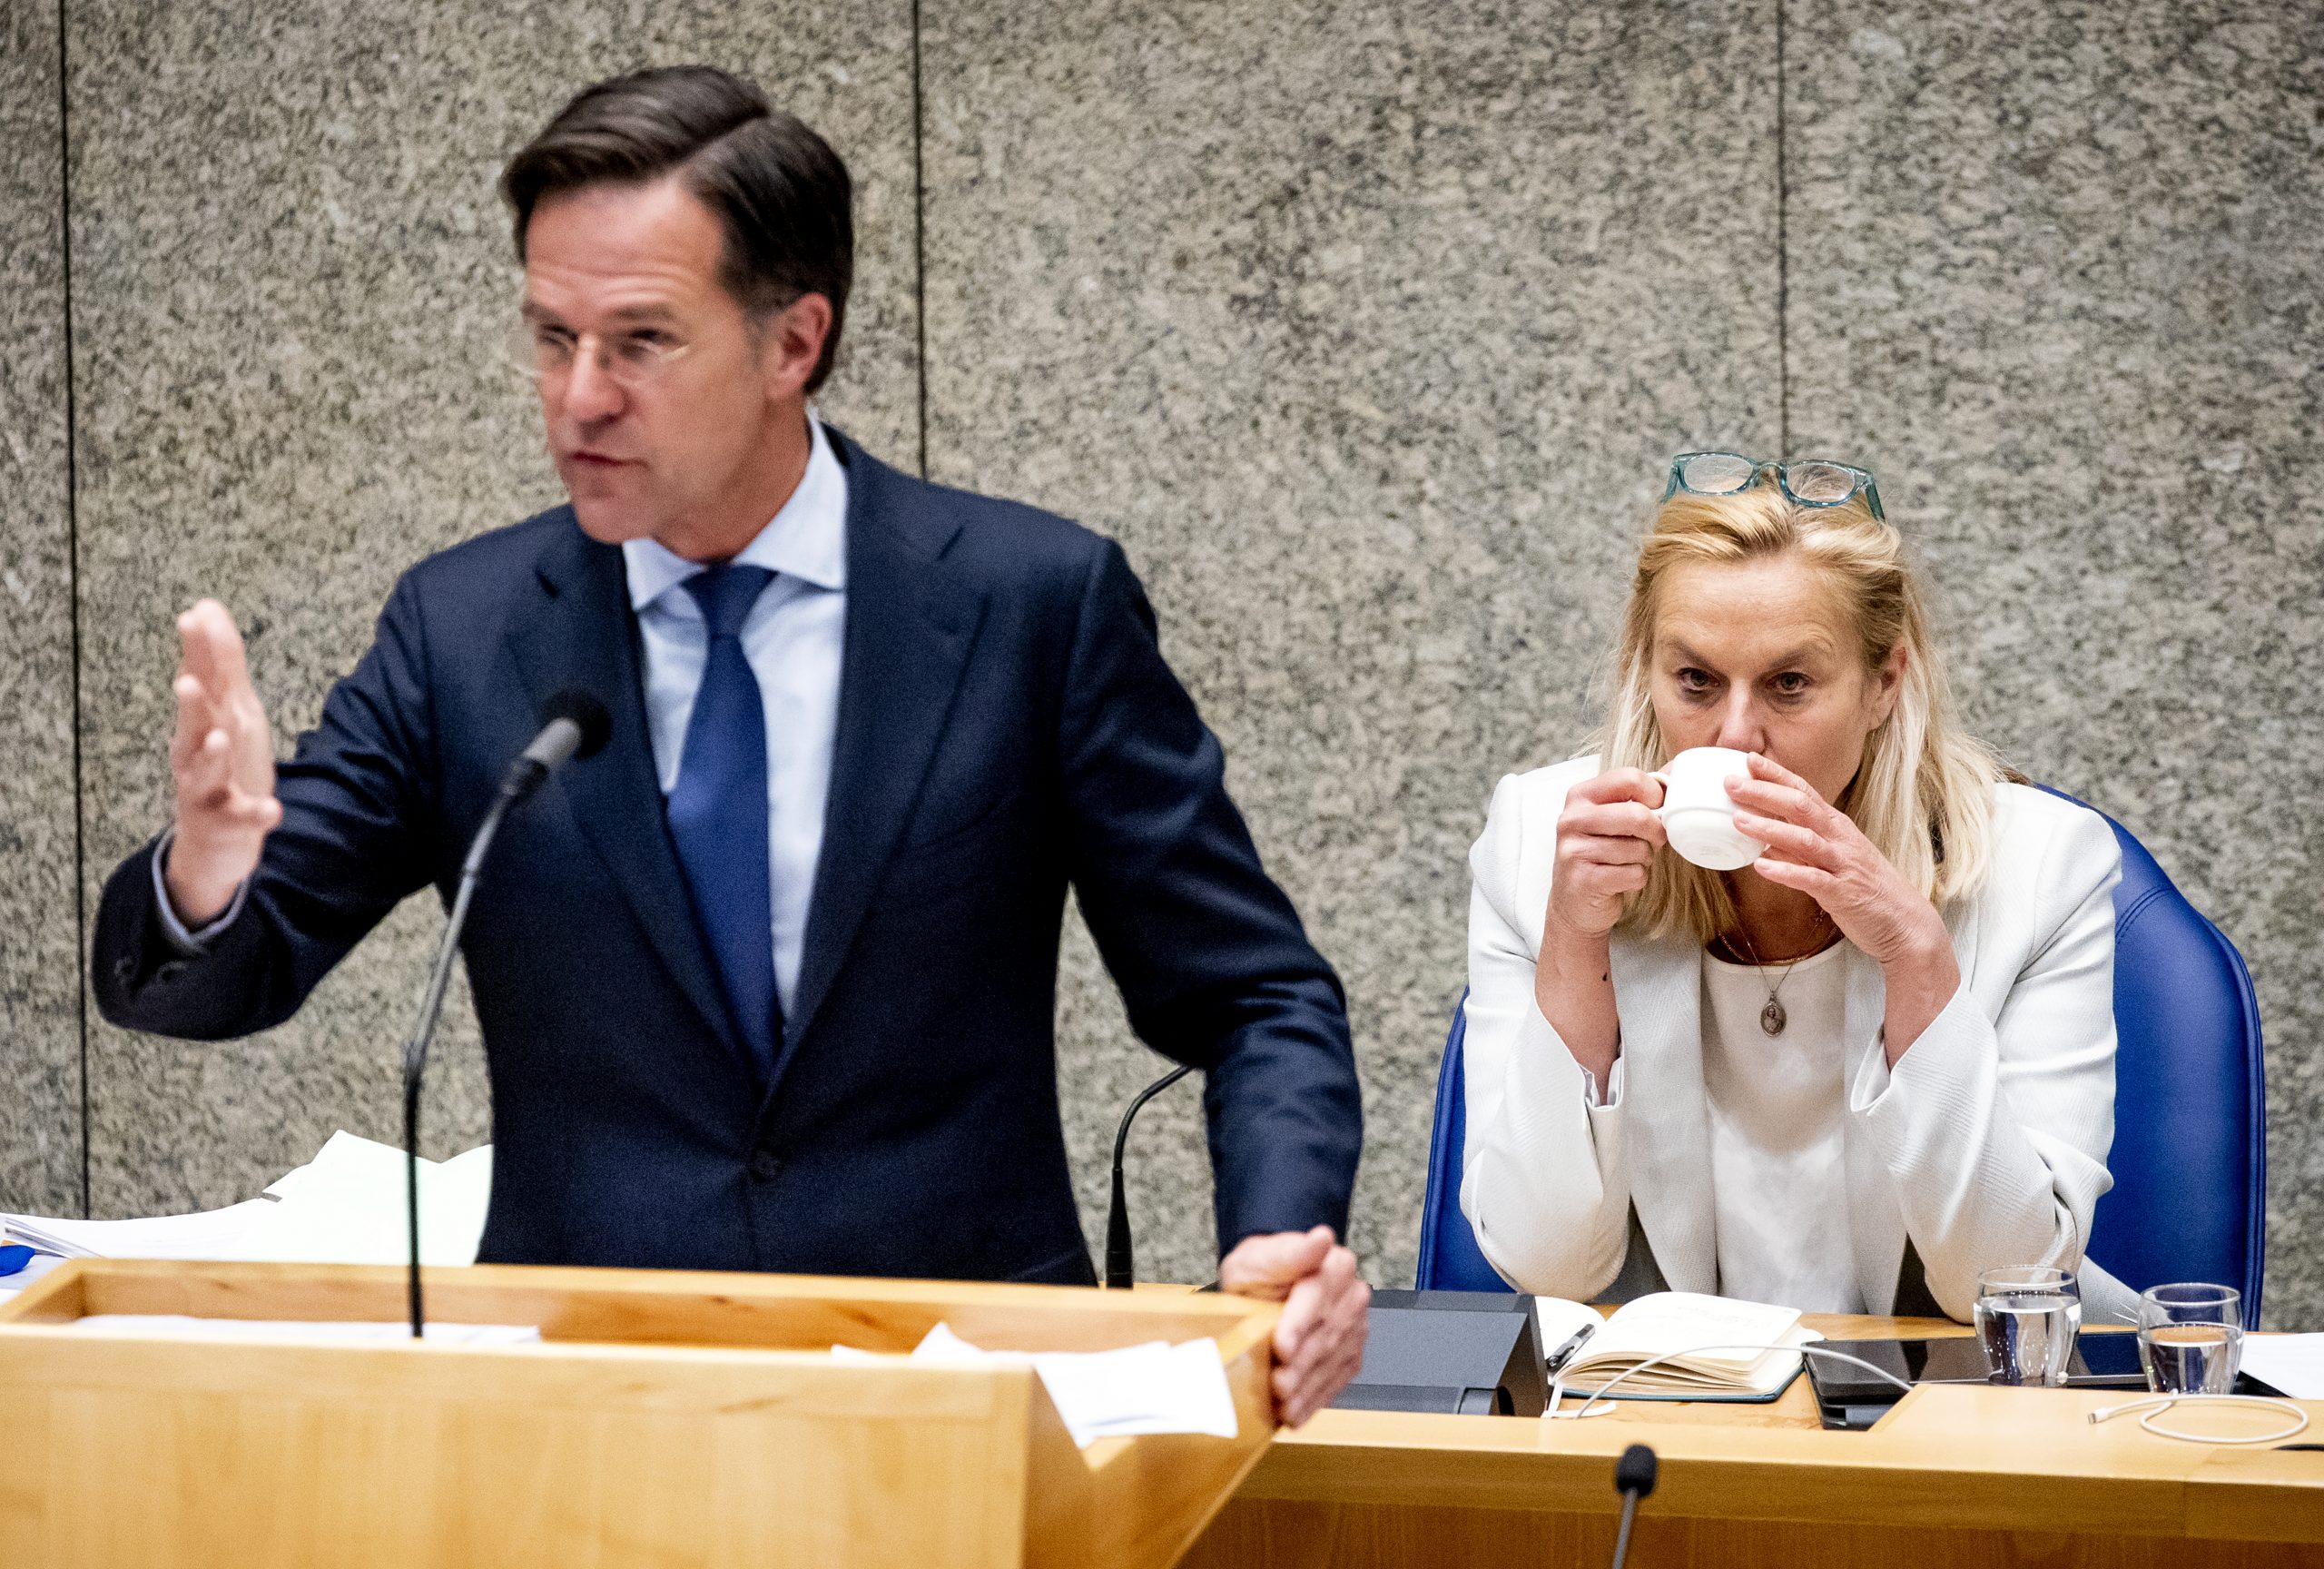 Demissionair premier Mark Rutte tijdens een debat in de Tweede Kamer met achter hem D66-leider Sigrid Kaag. Foto: ANP/Sem van der Wal